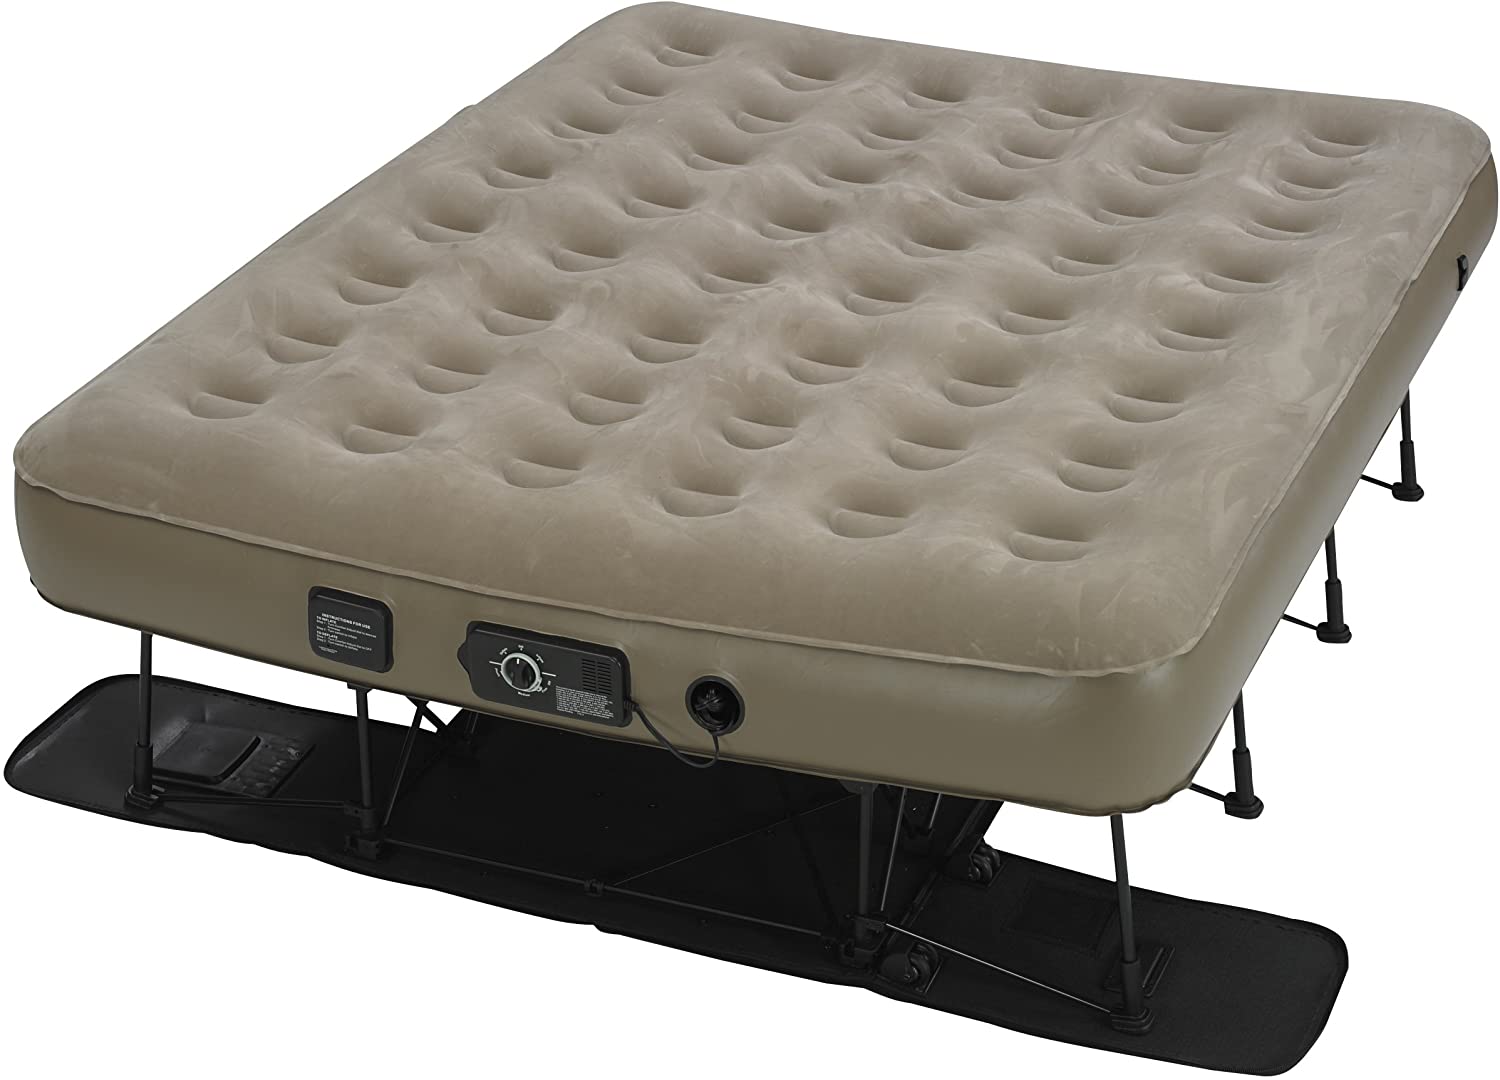 cots or air mattress